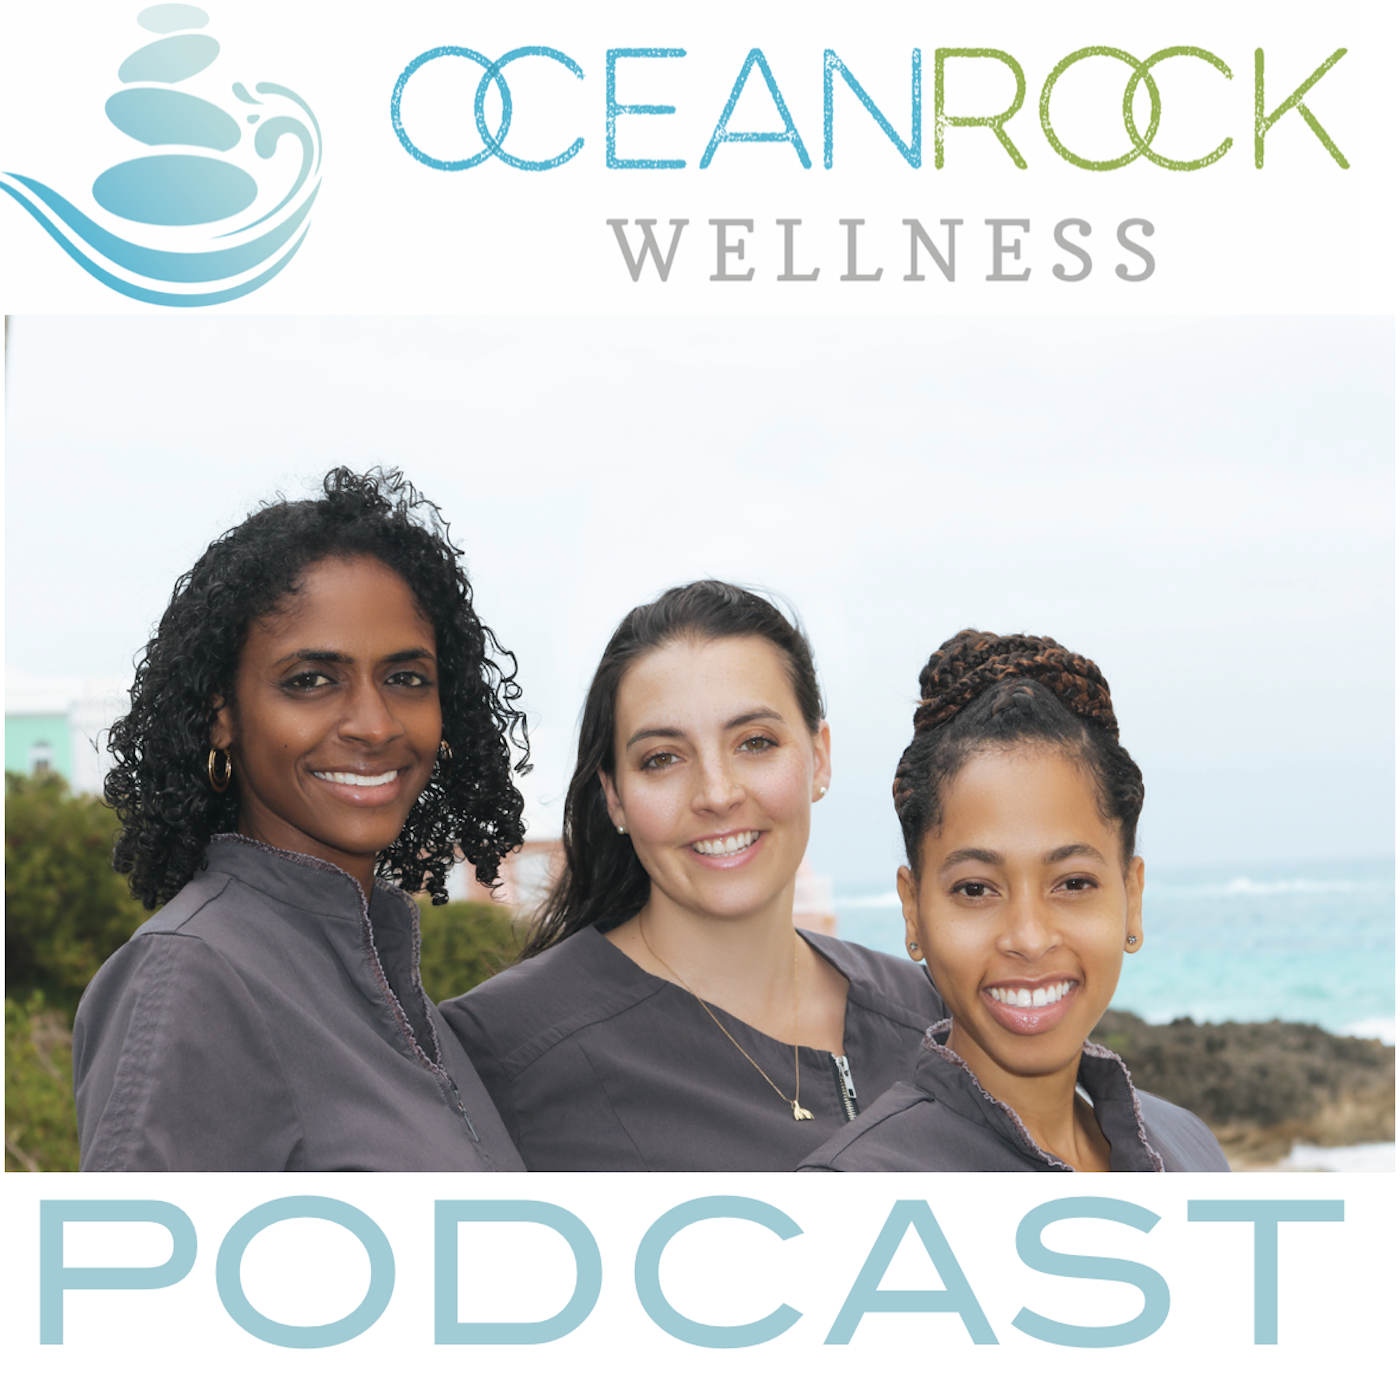 Ocean Rock Wellness